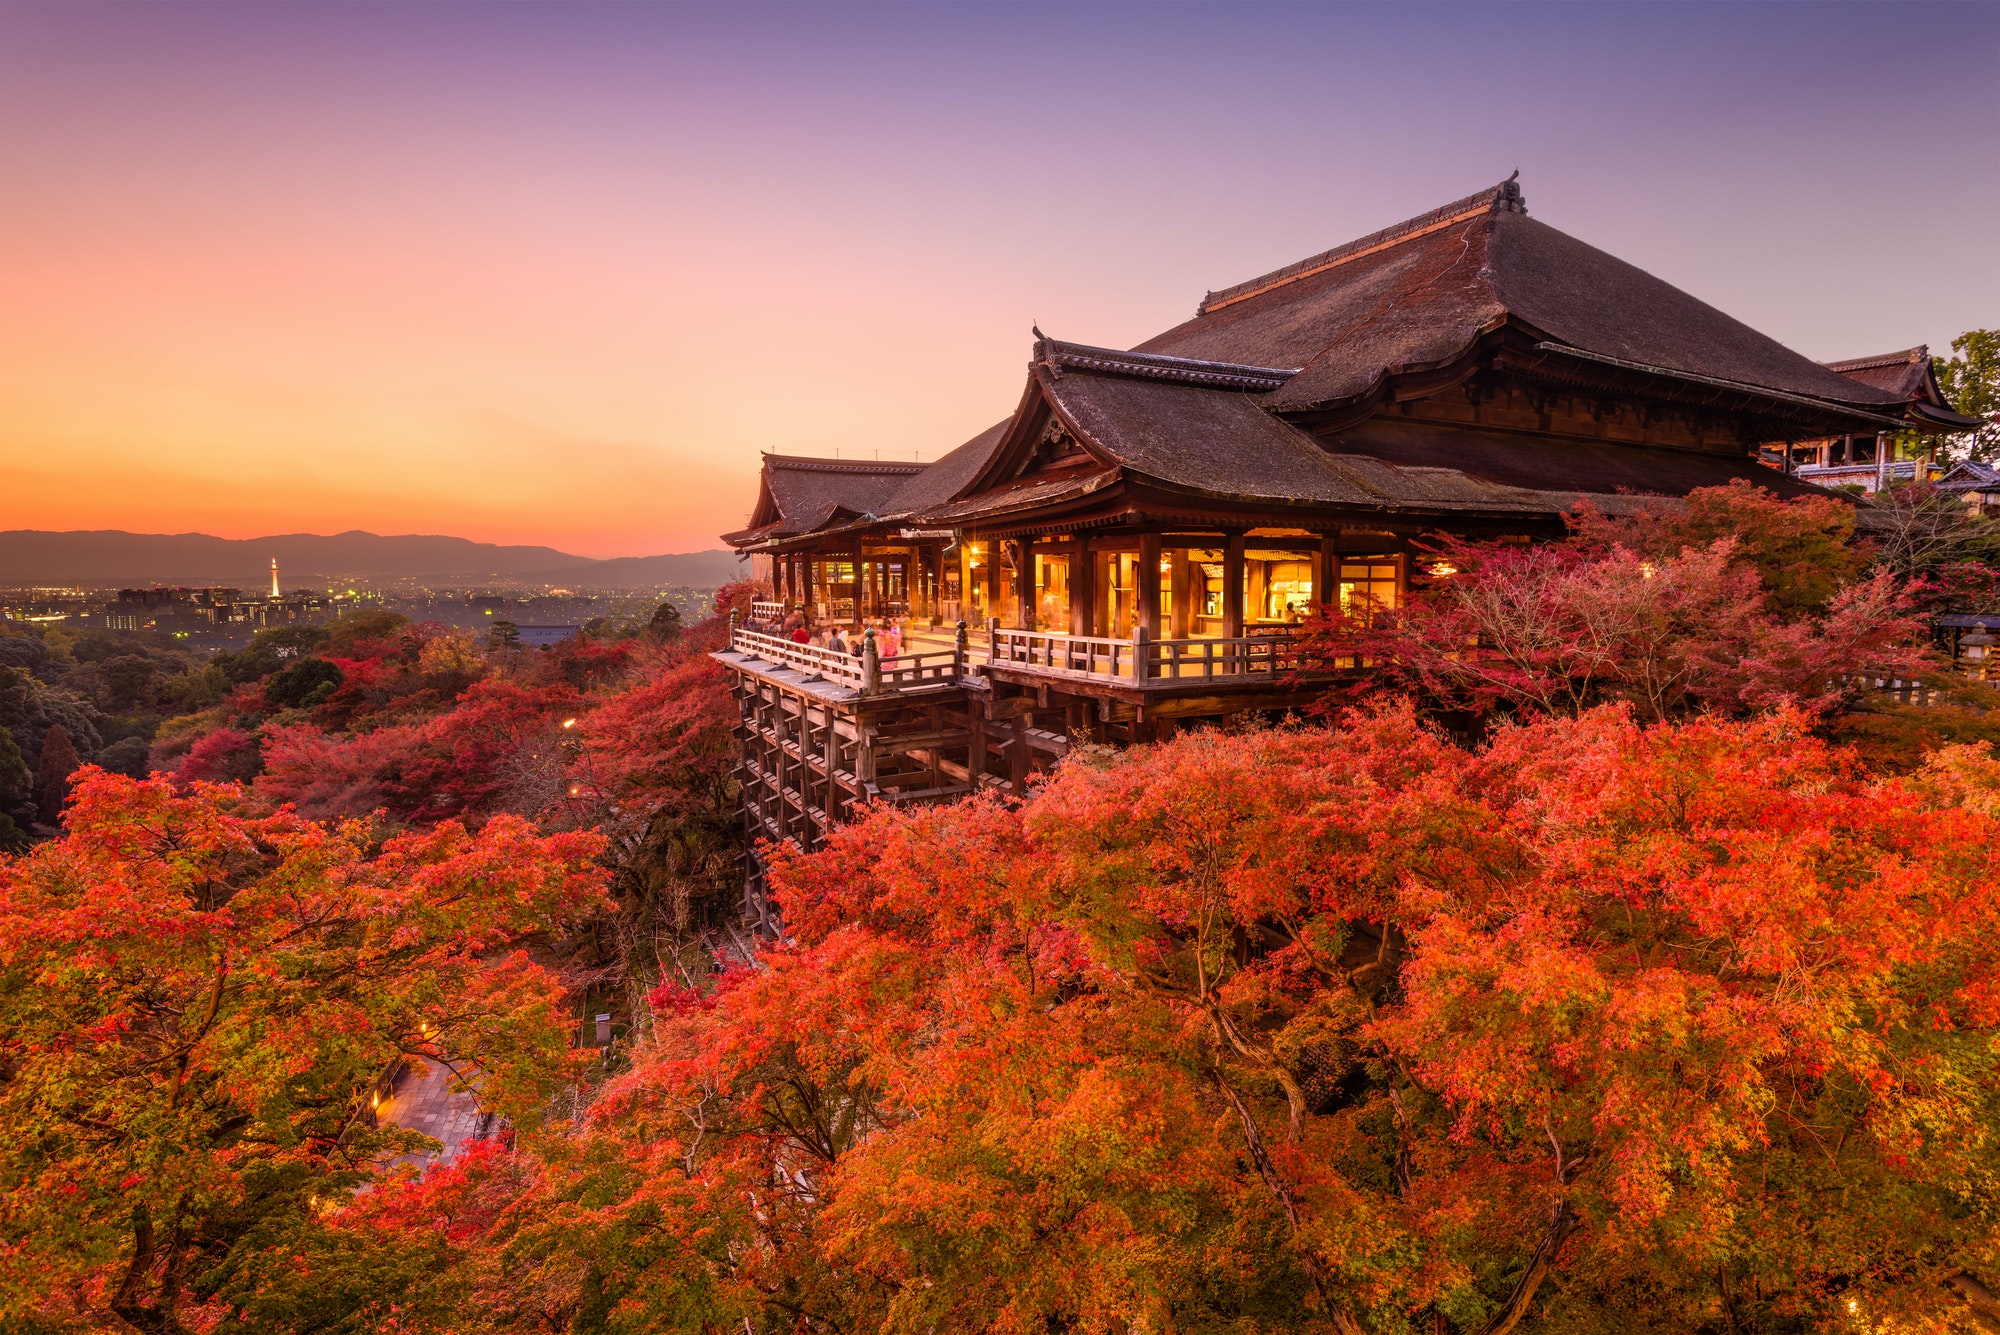 Kiyomizu-dera Temple in Japan